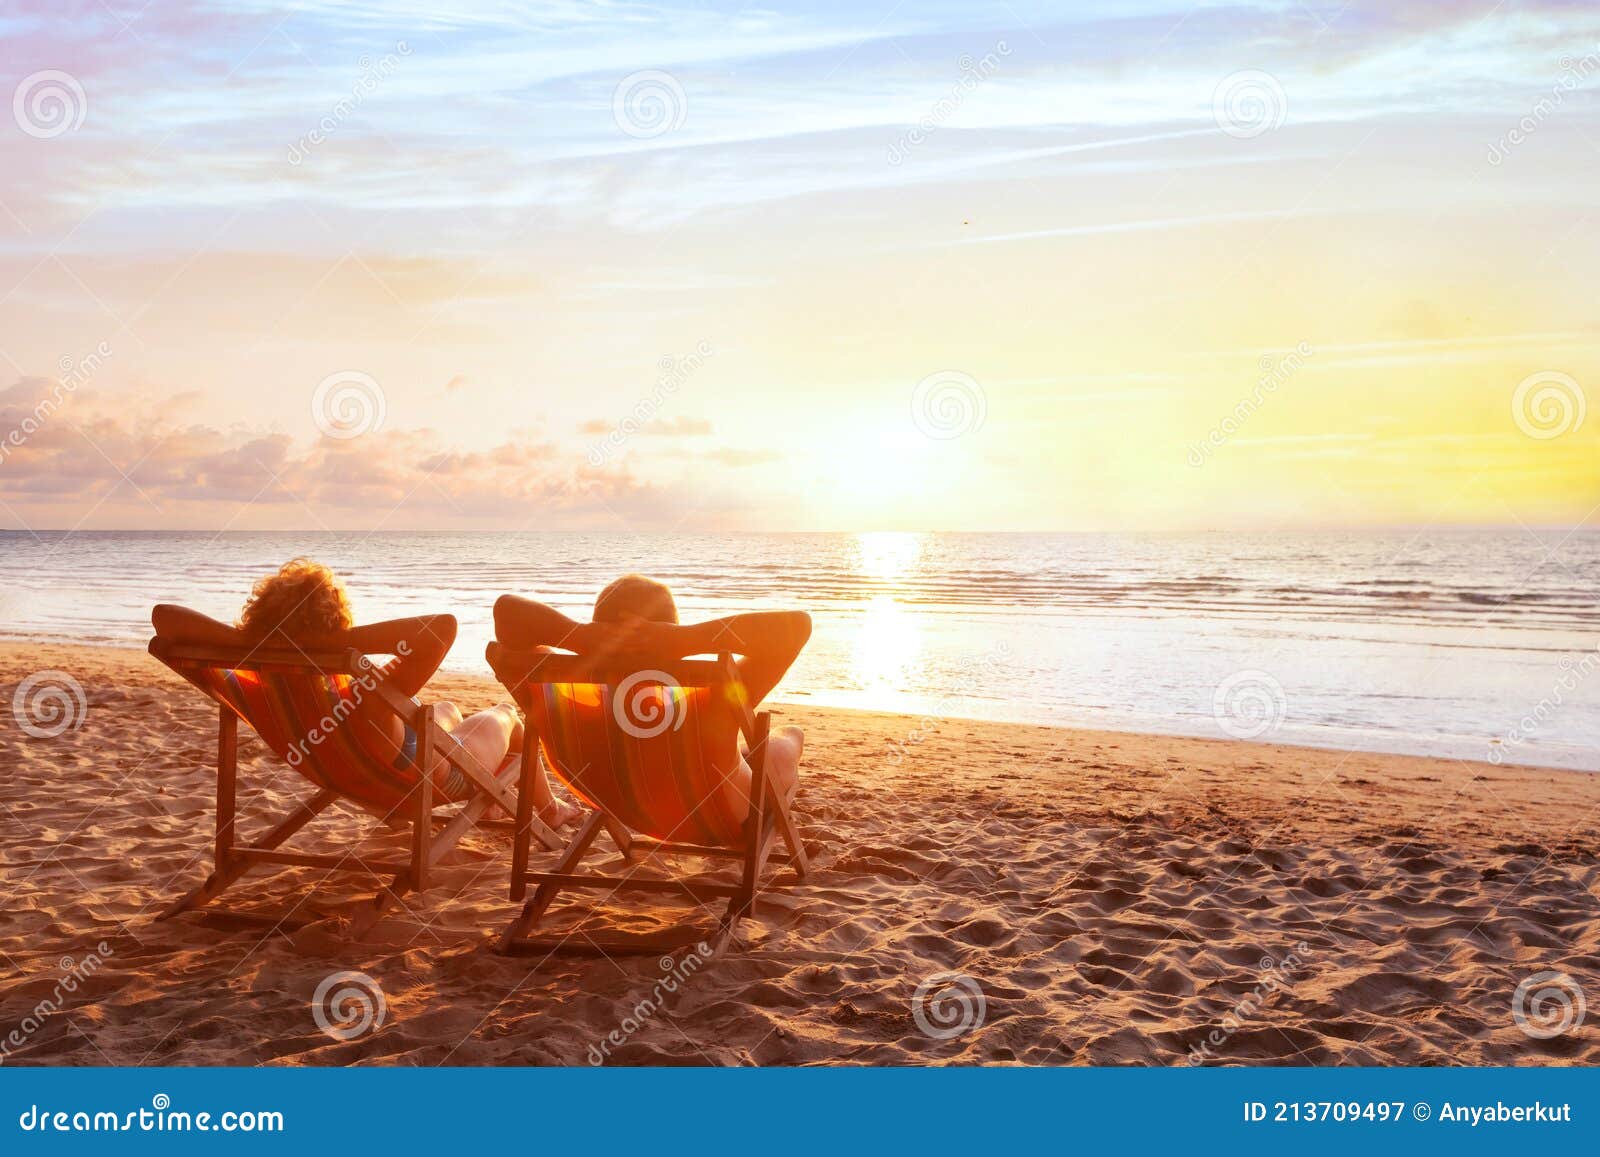 beach holidays, romantic getaway retreat for couple